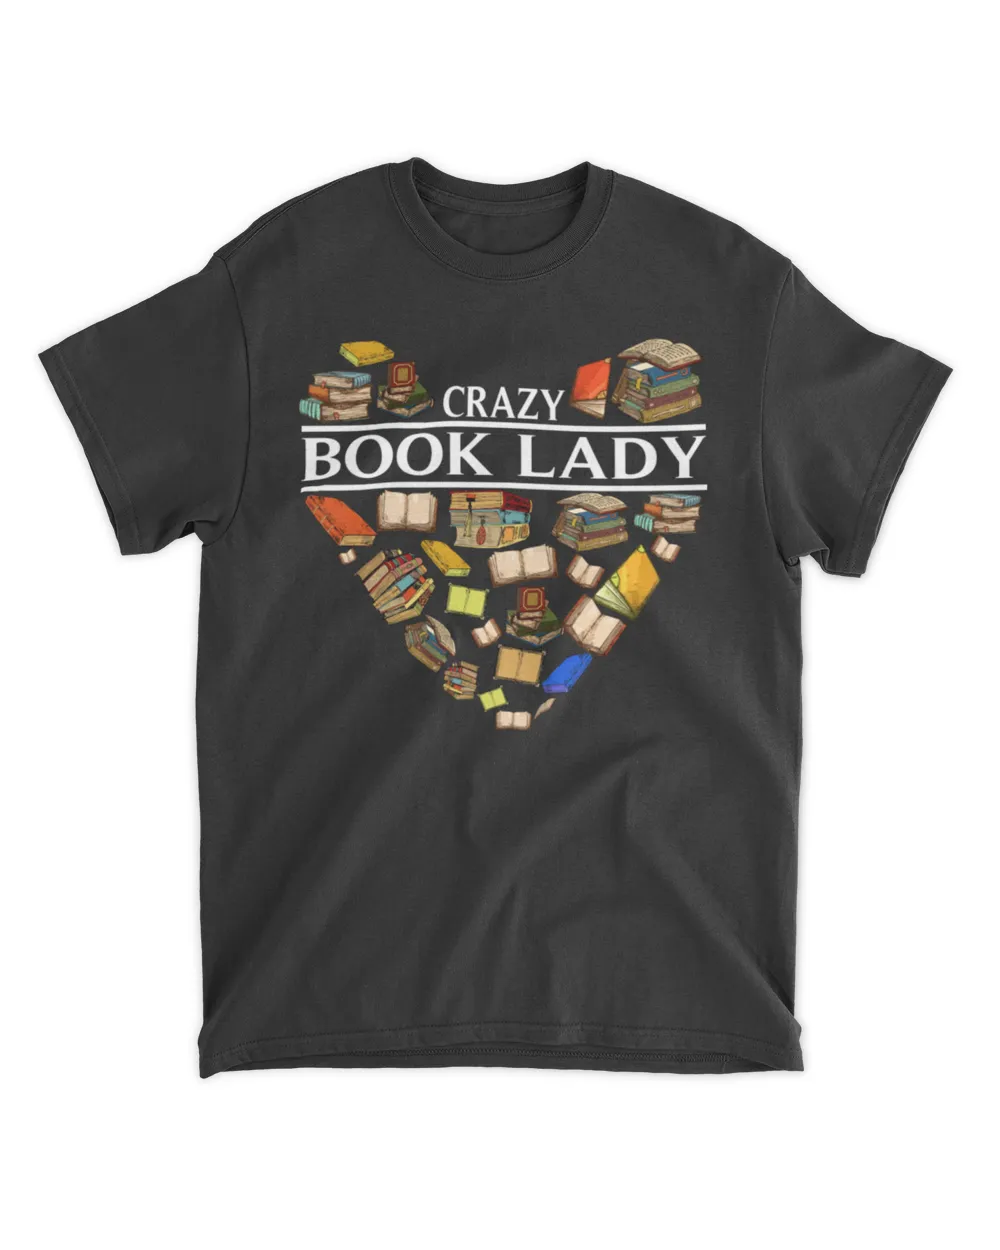 Books lady